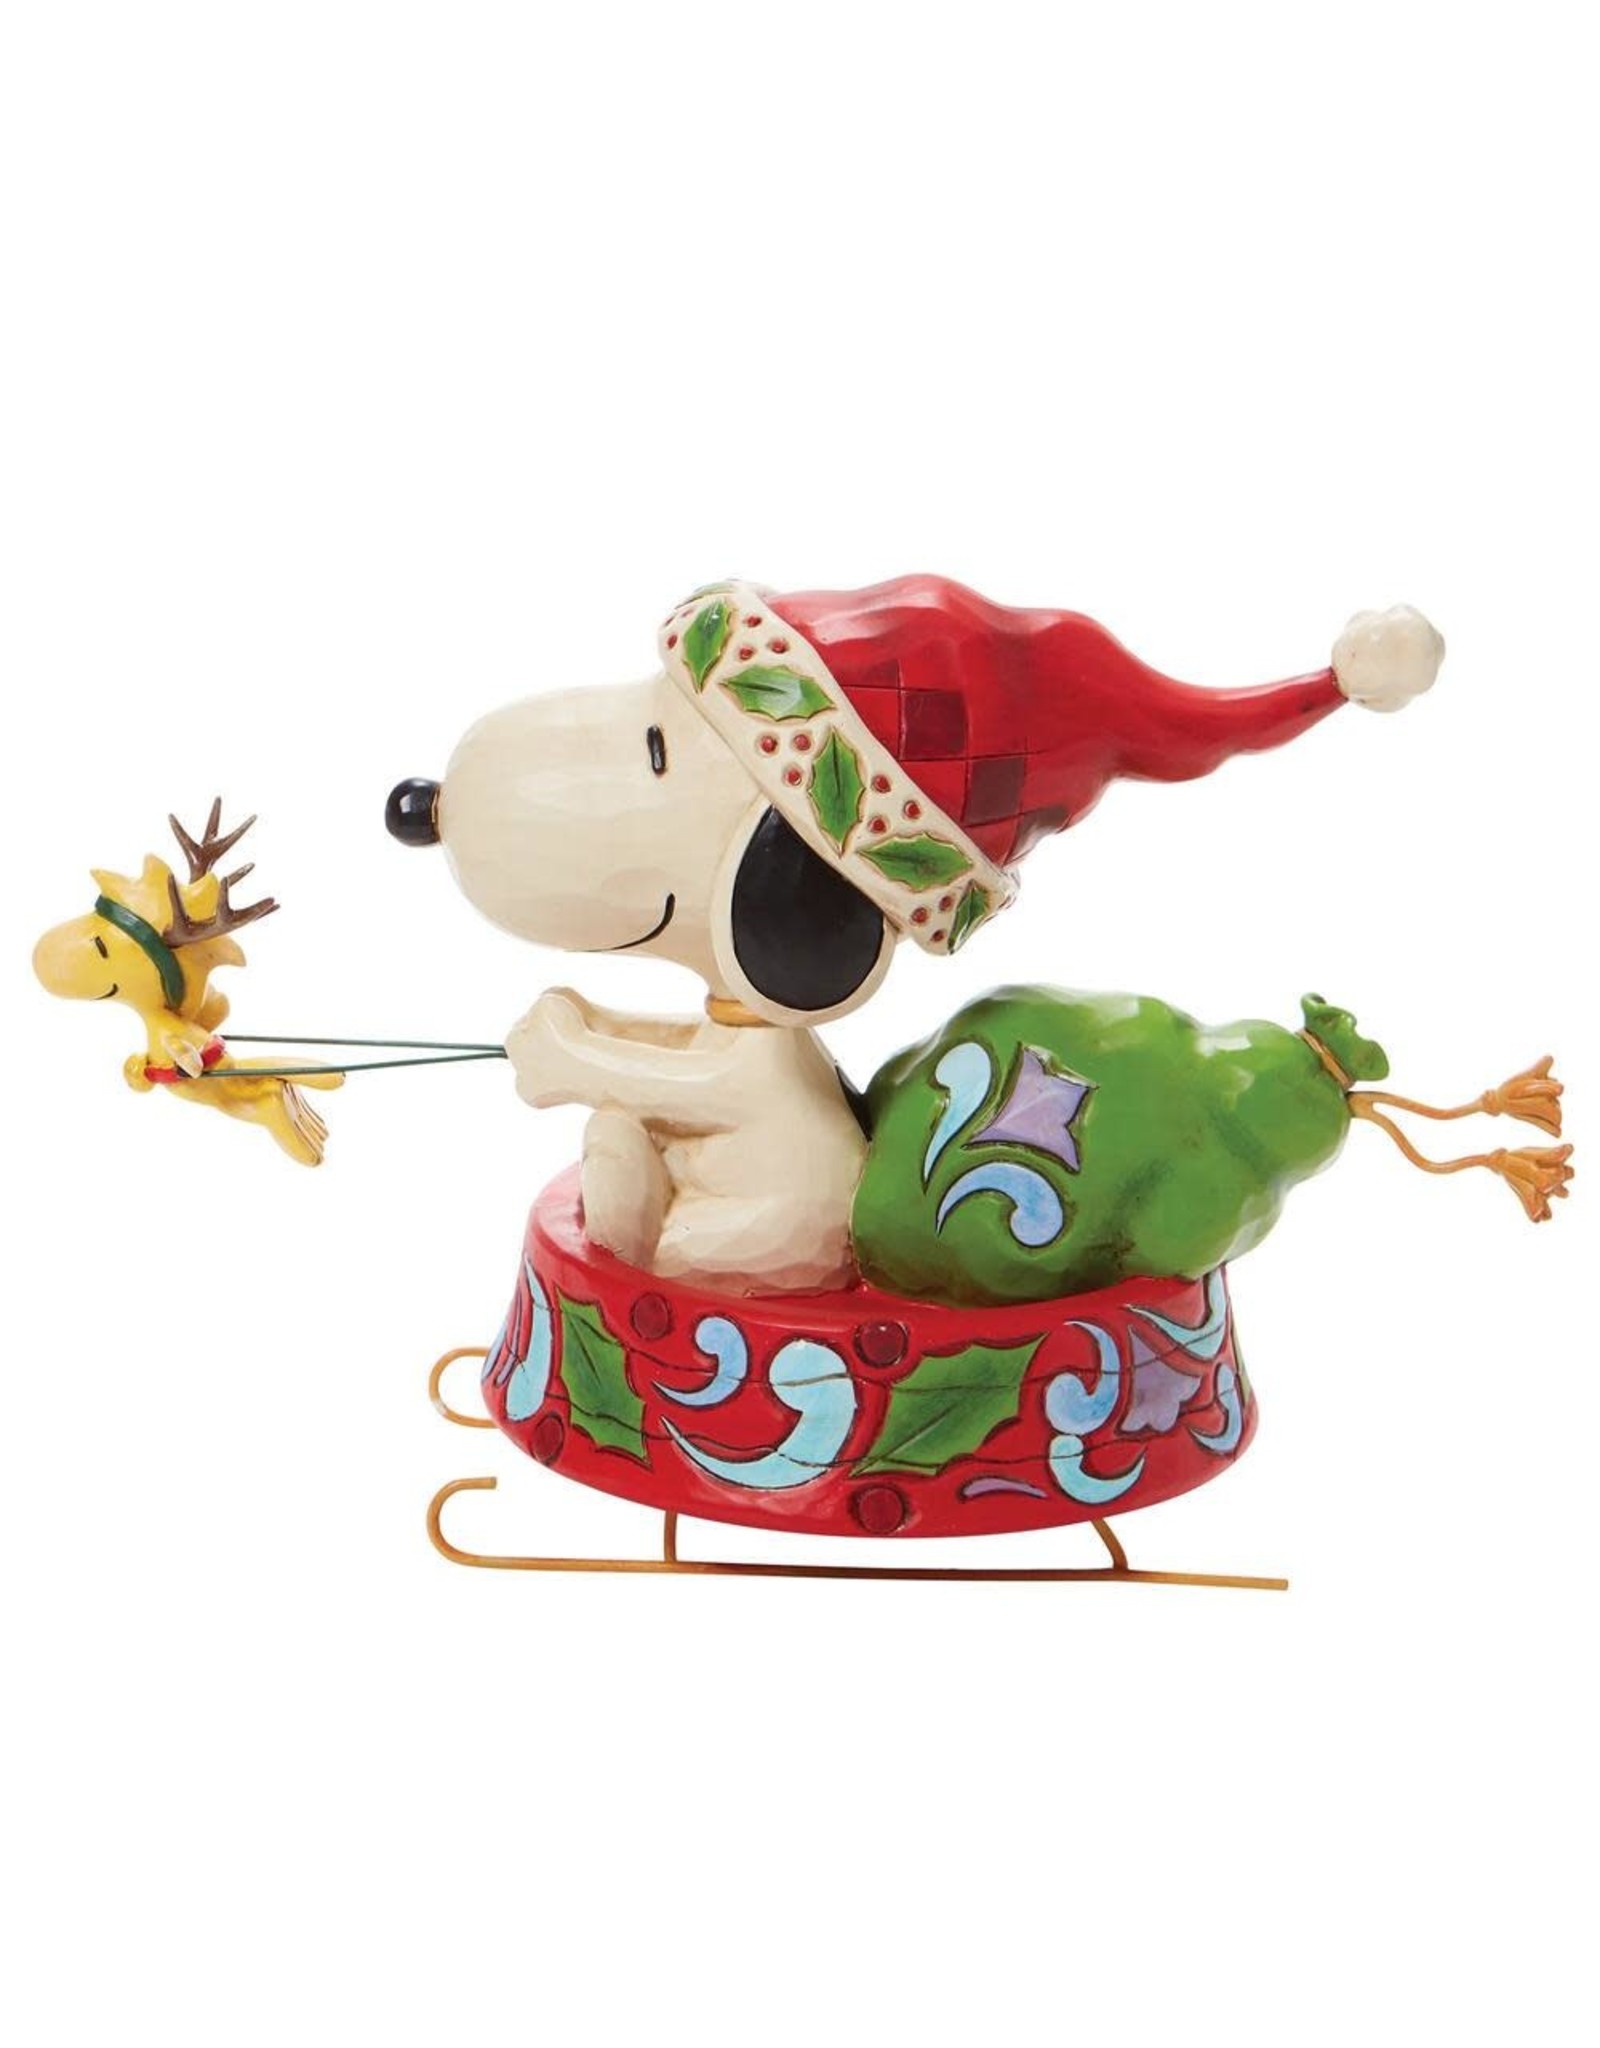 Jim Shore "Dashing Through the Holidays" Snoopy